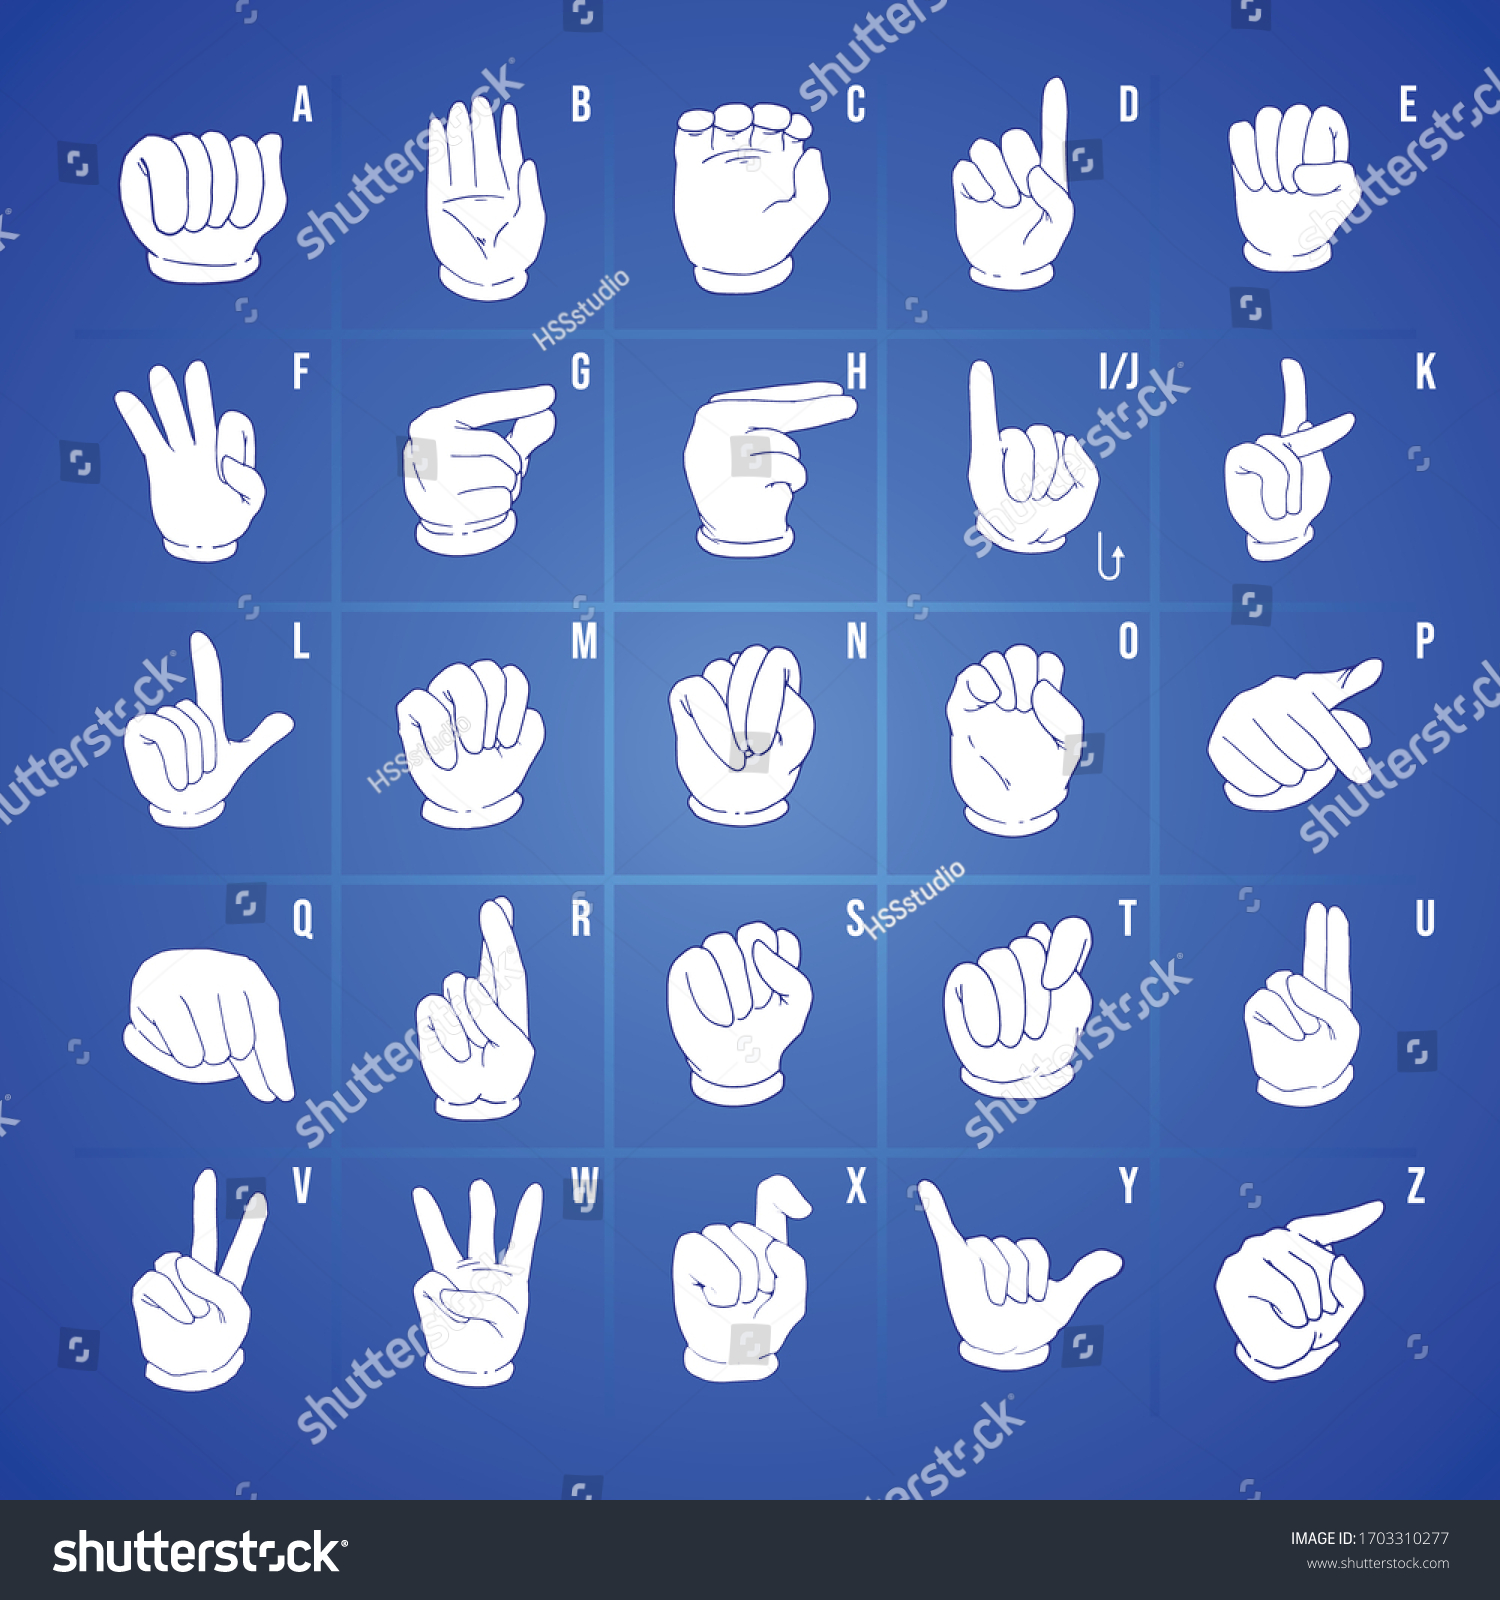 Hand Sign Language Alphabet Collection Vector เวกเตอร์สต็อก ปลอดค่าลิขสิทธิ์ 1703310277 